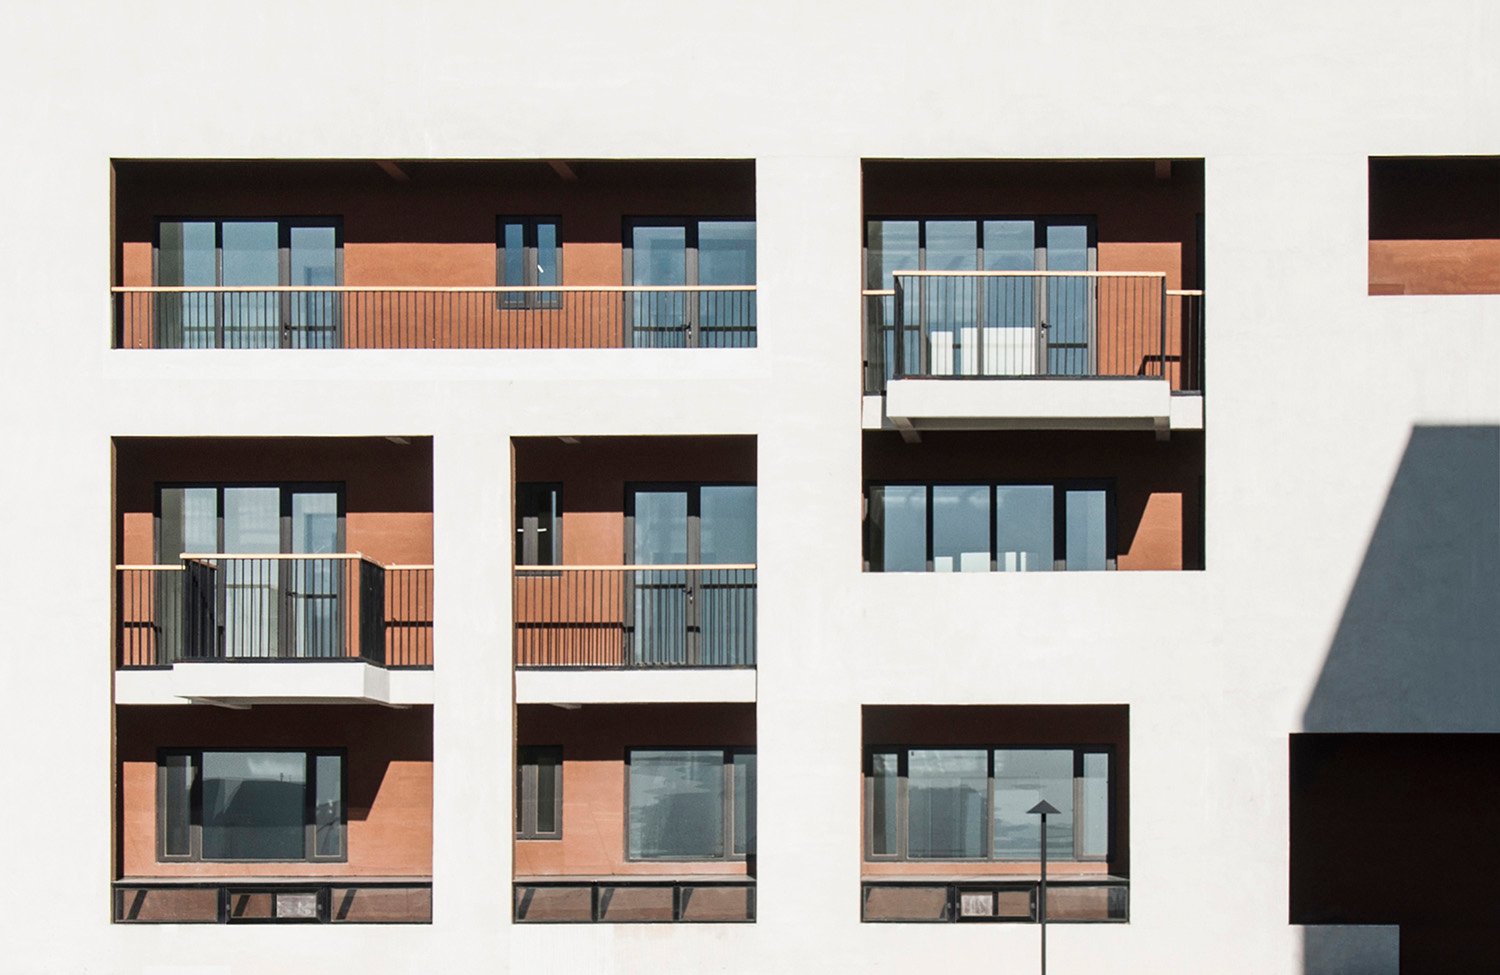 Facade of dormitory | Zhi Geng